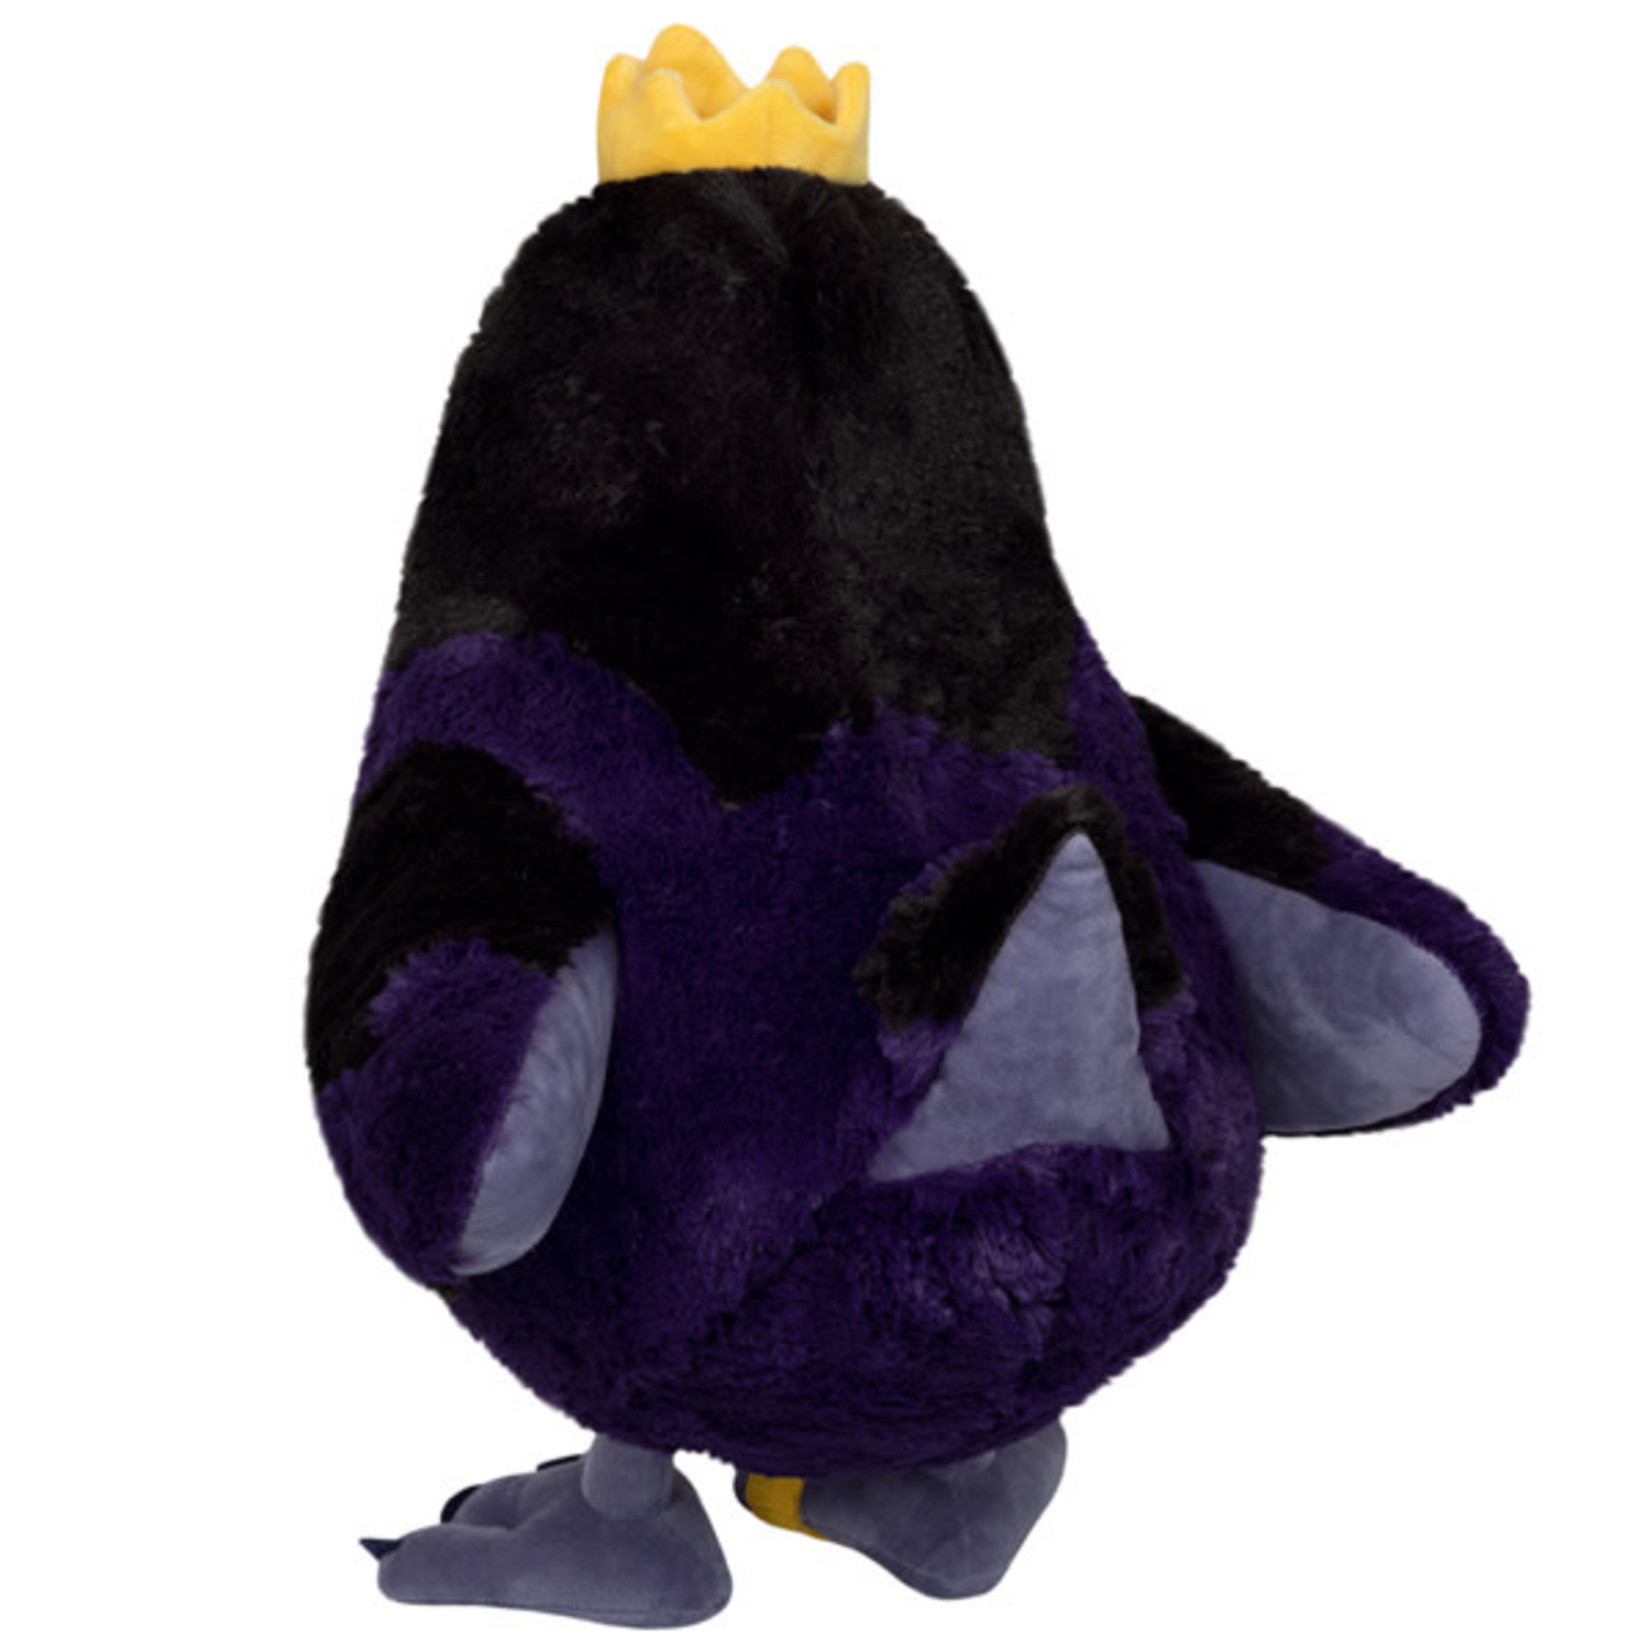 Squishable Squishable King Raven